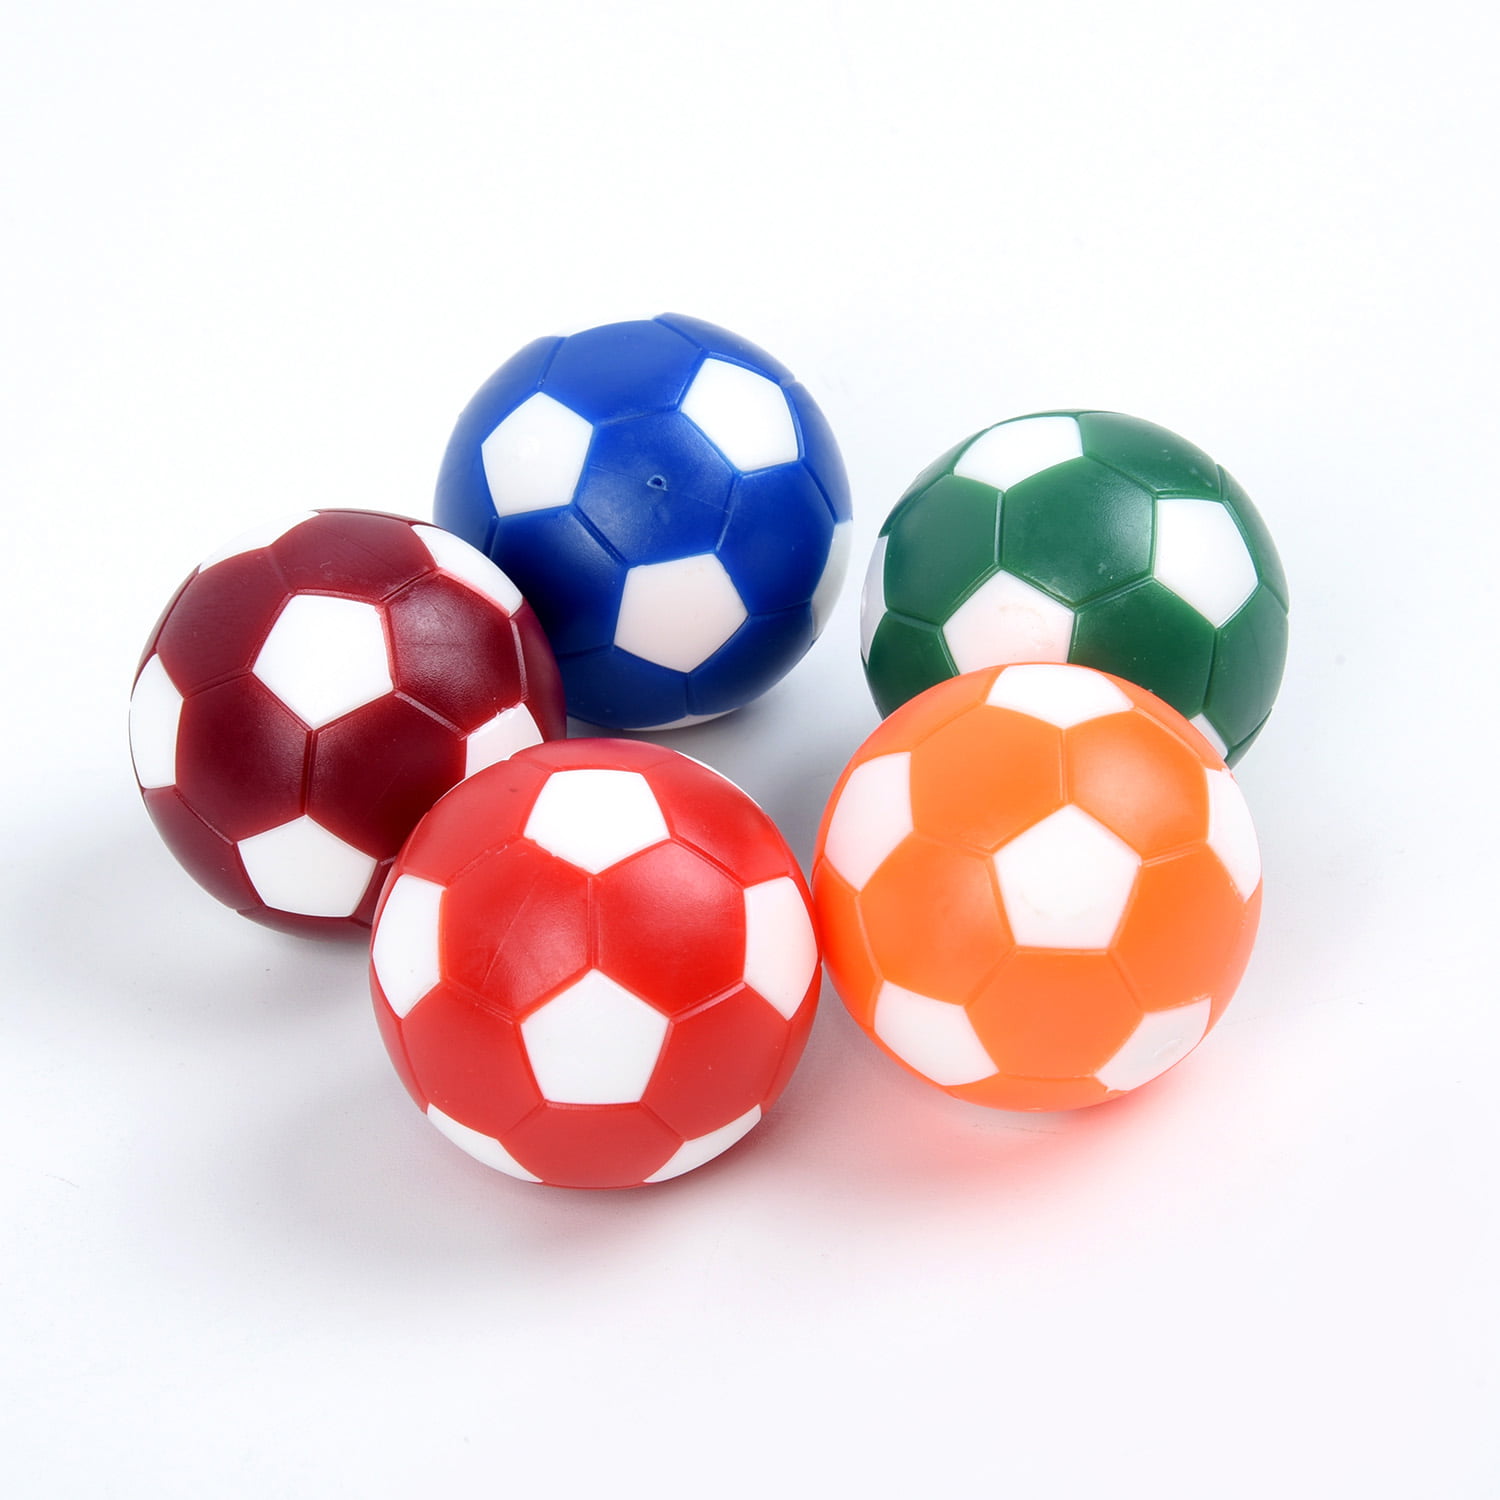 2x 32mm Foosball Table Football Plastic Soccer Ball Soccer ball Sport GiftIC